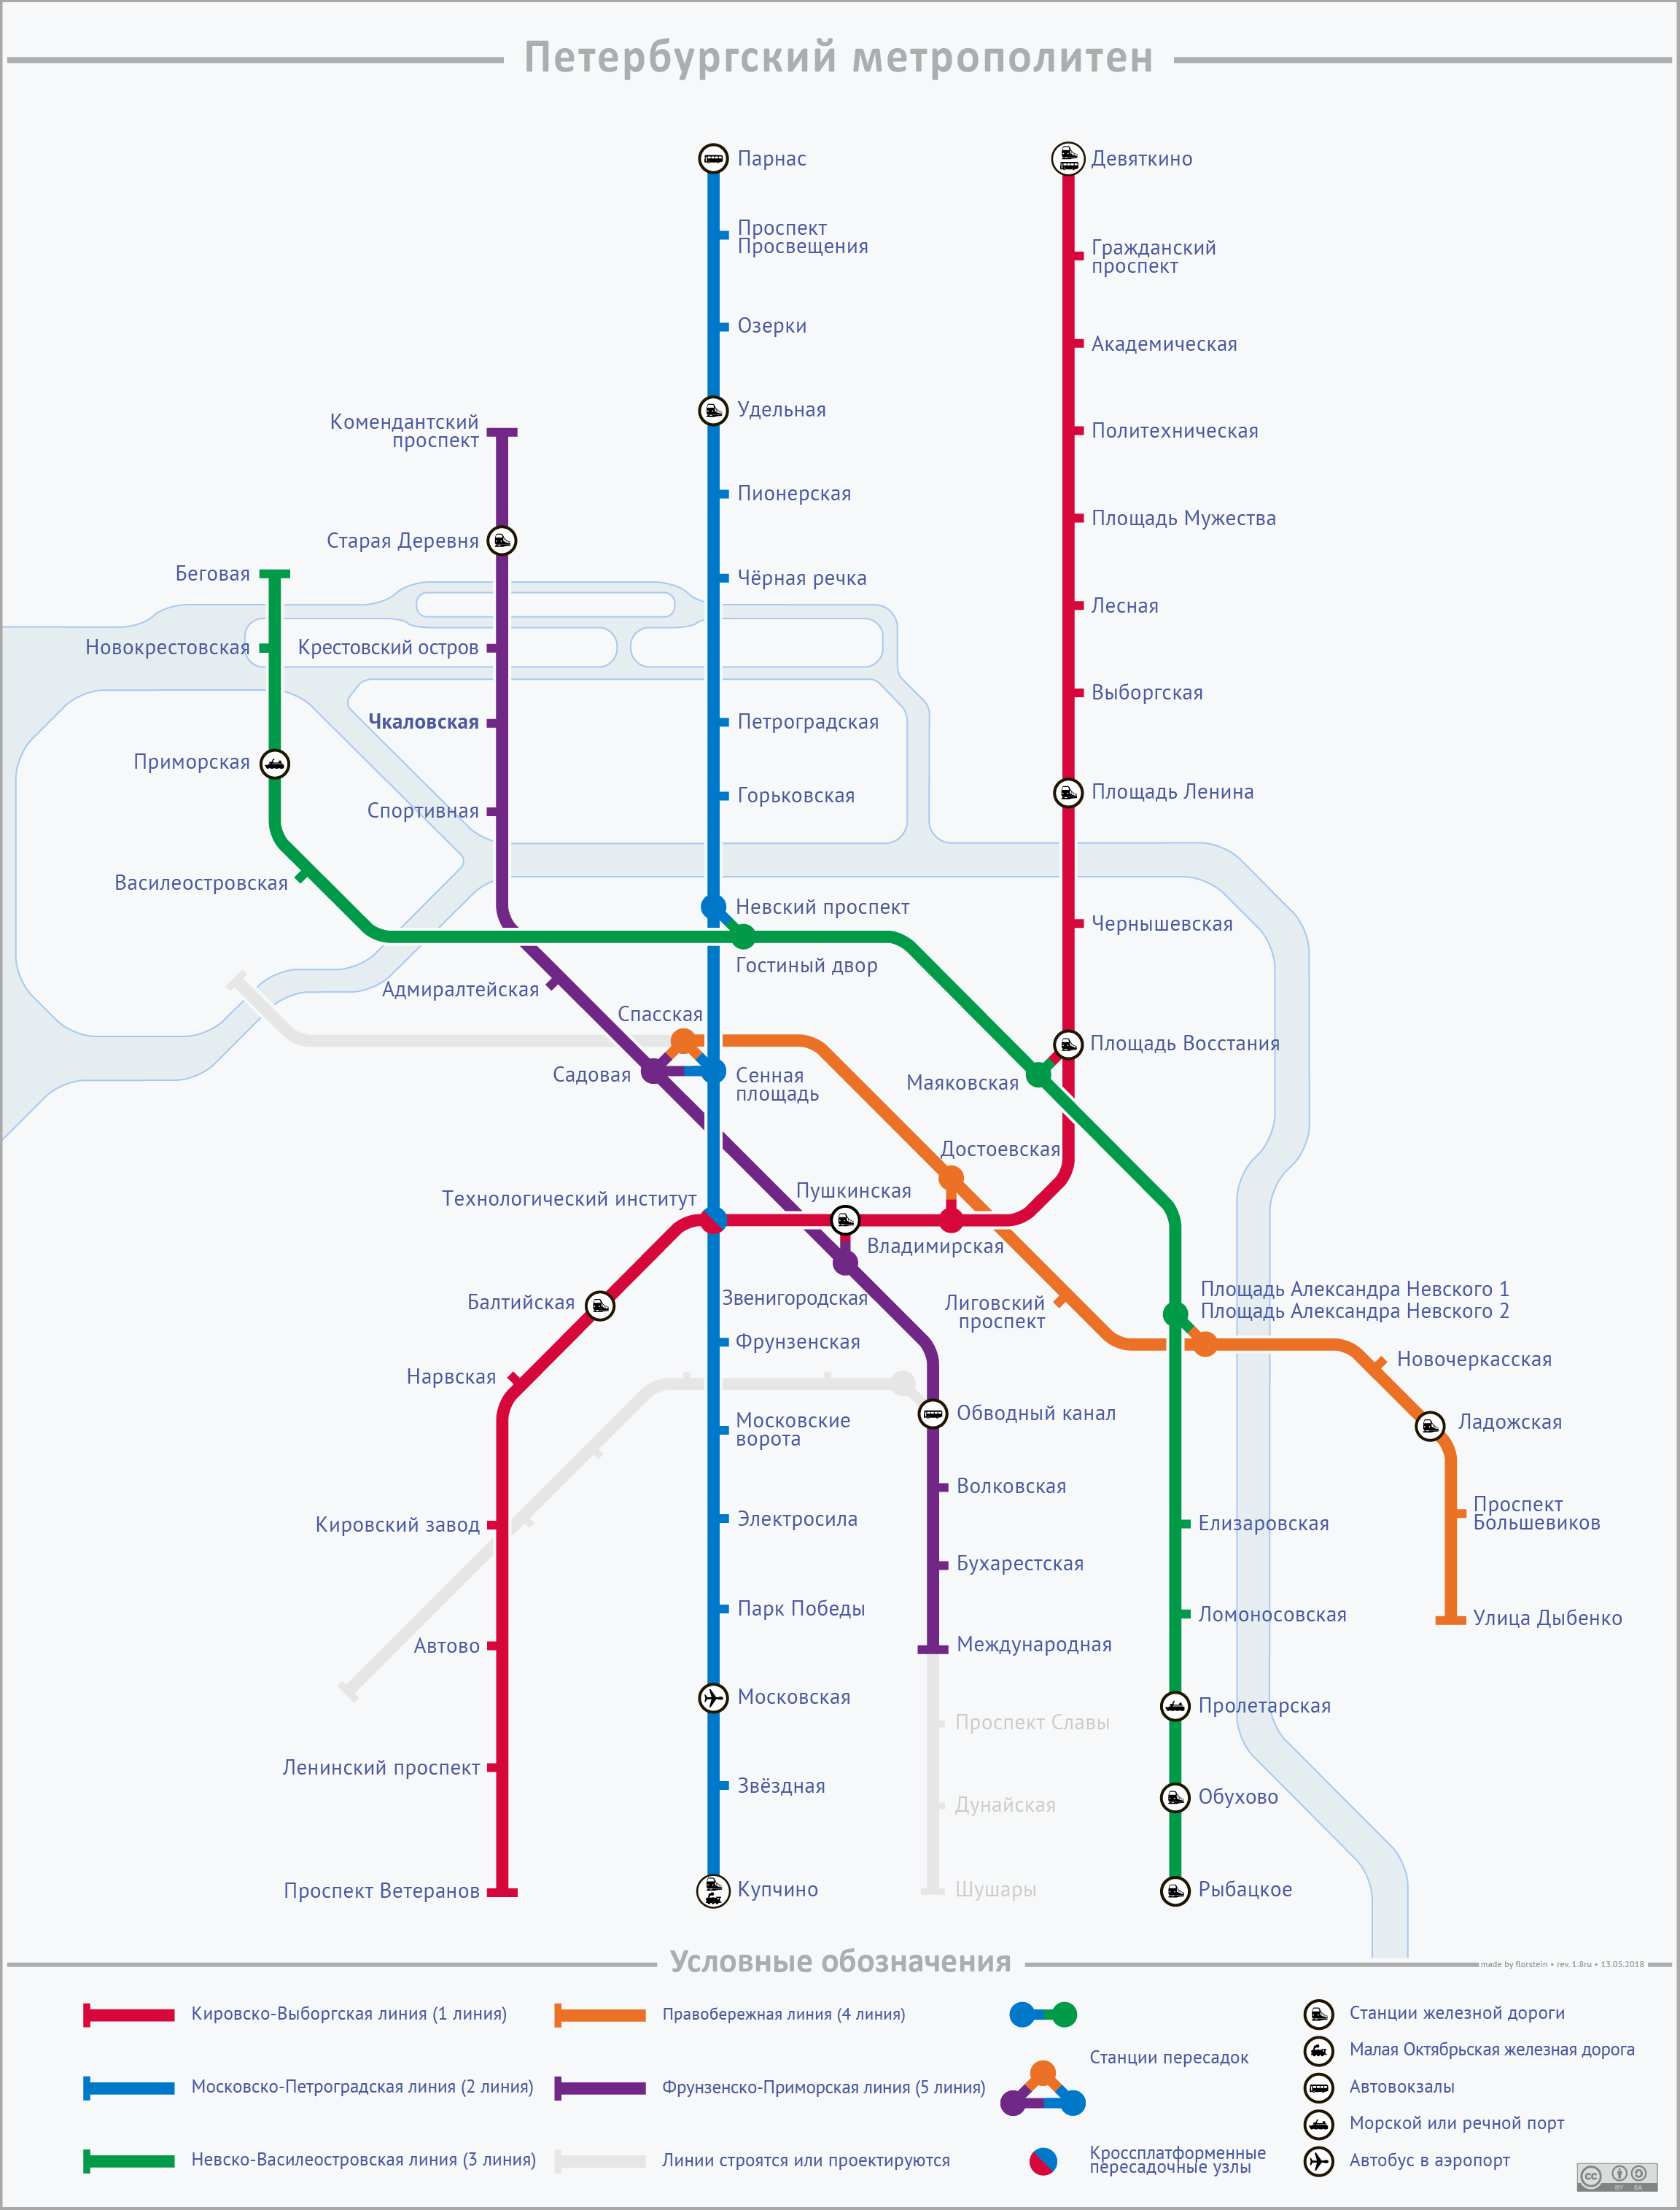 St Petersburg — Metro — Maps